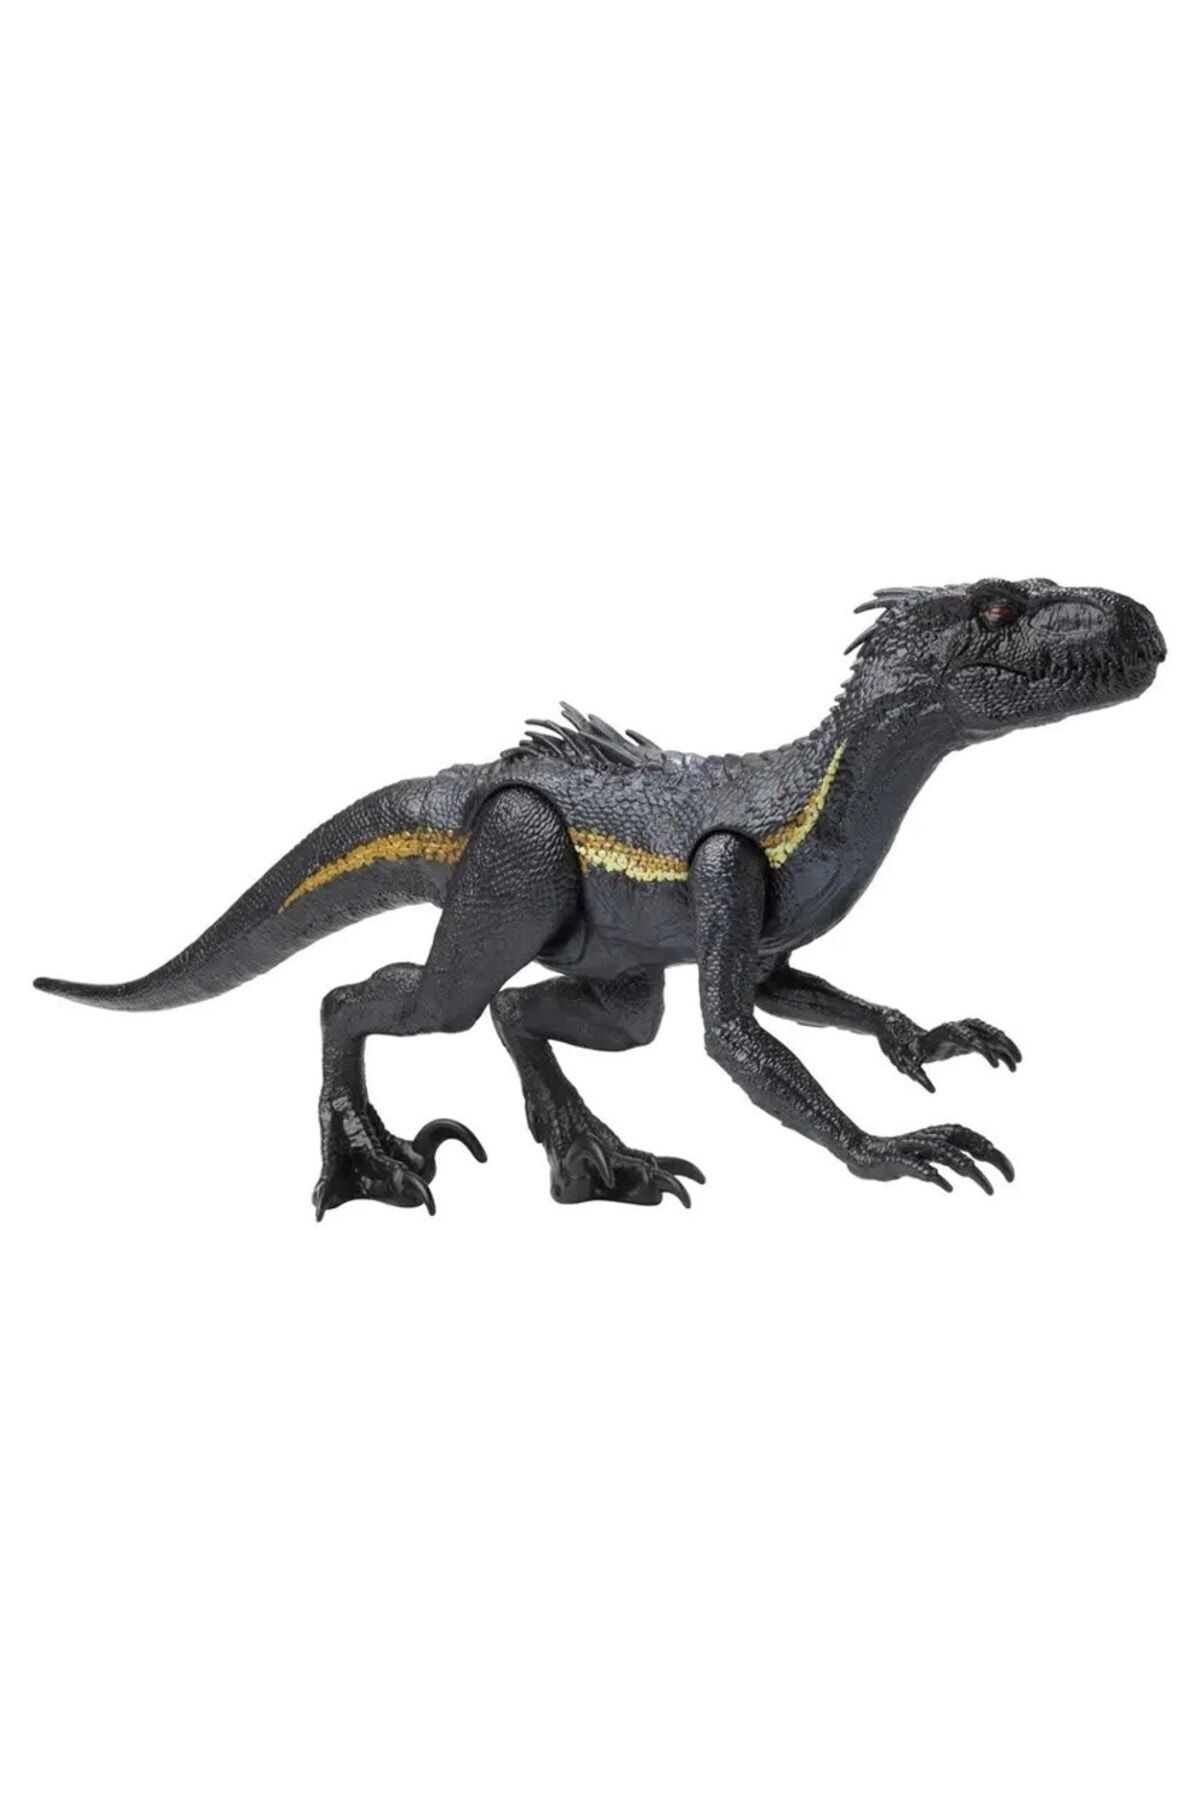 Jurassic World Proceratosaurus Indoraptor (mattel Dinozor 30 Cm 12 Inç Jurasic Word Dinazor )